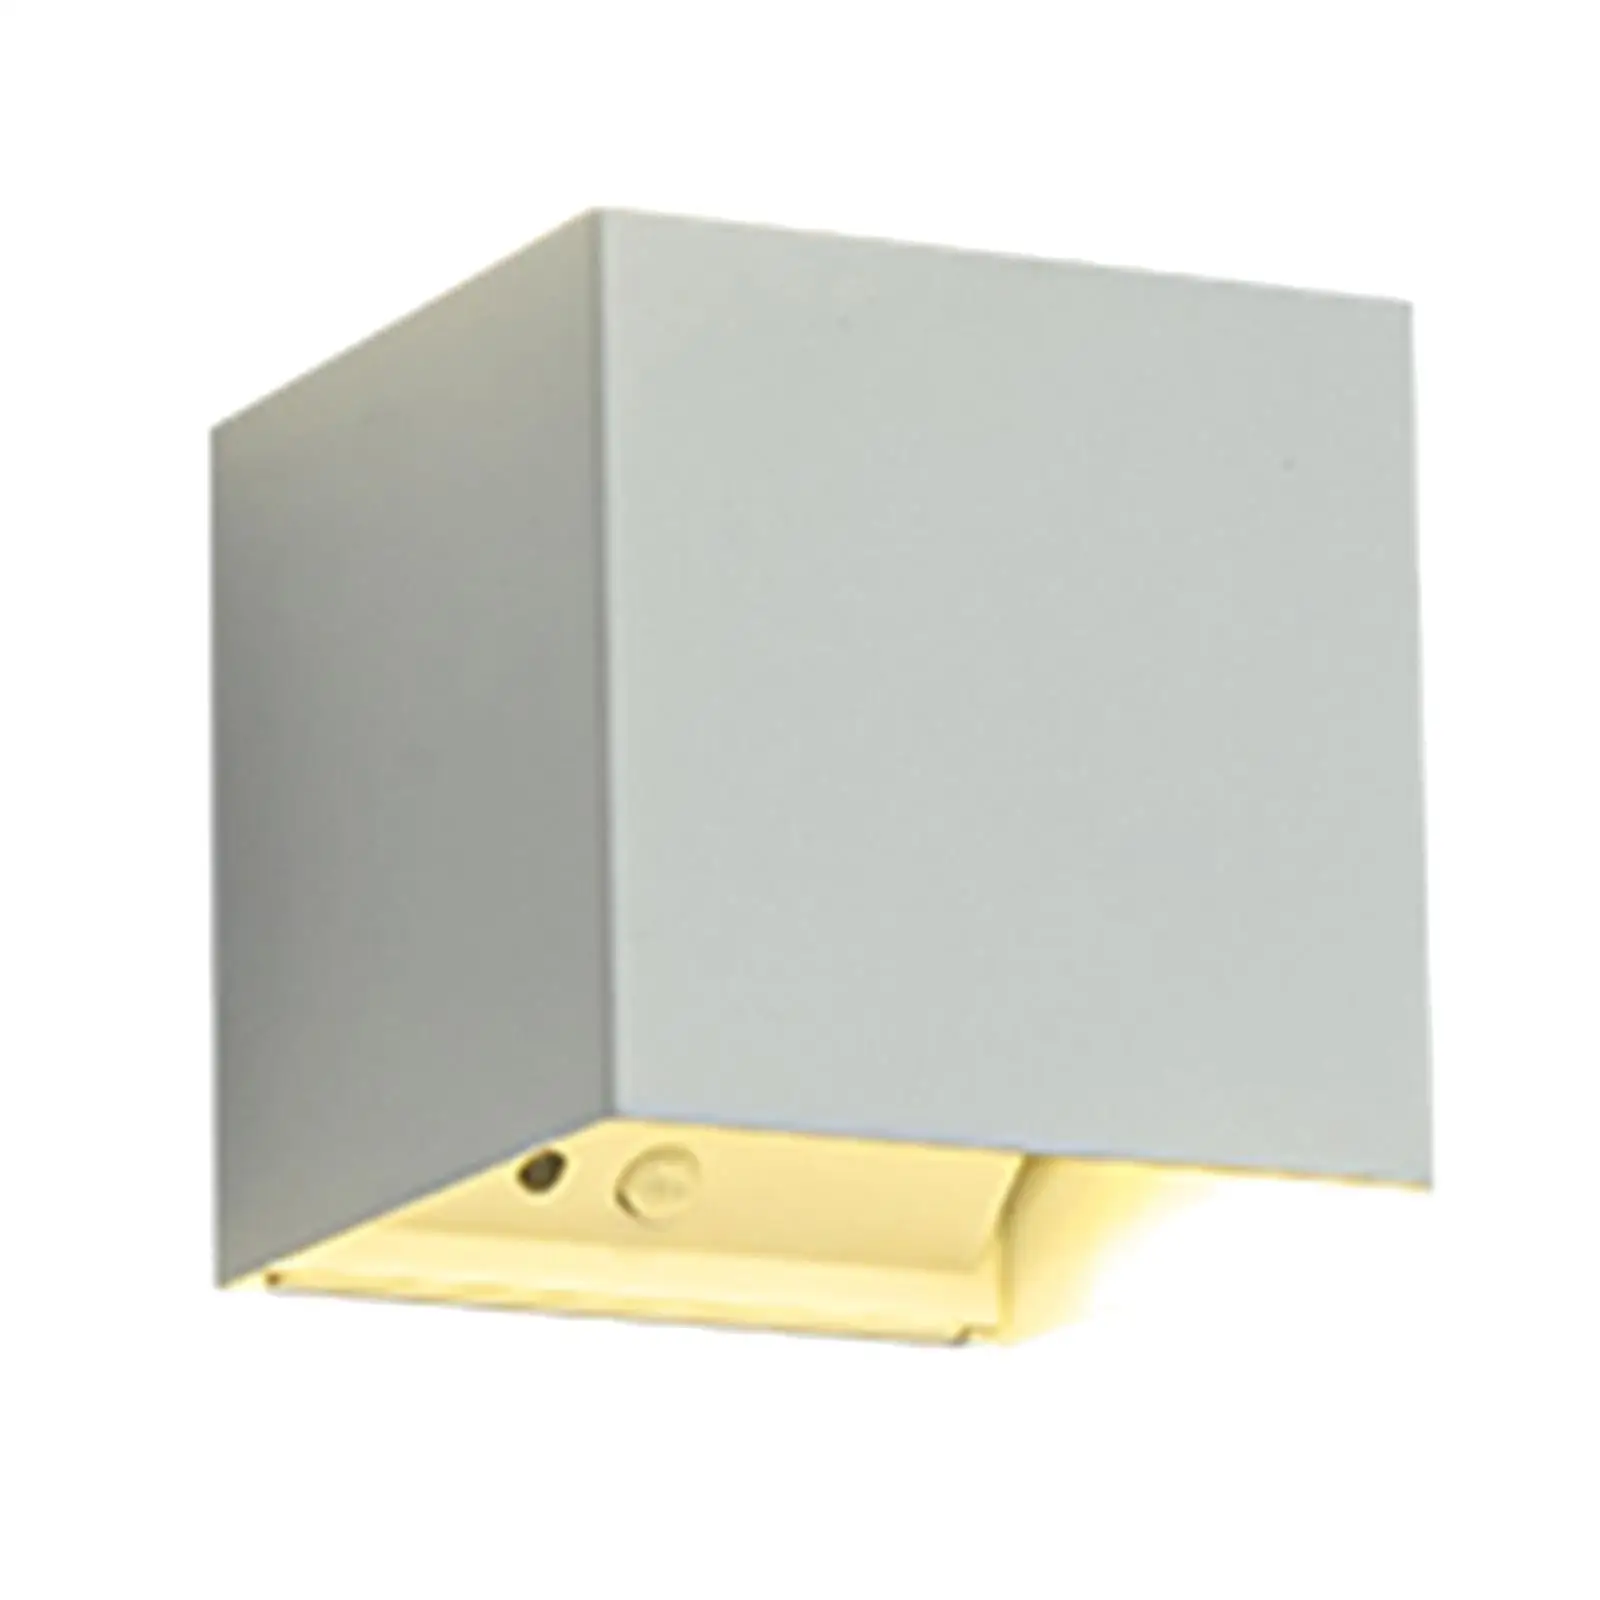 Wall Mounted Lights Body Sensor LED Sensor Lights Wall Lamp Fixtures for Stairway Kitchen Hallway Living Room Basement